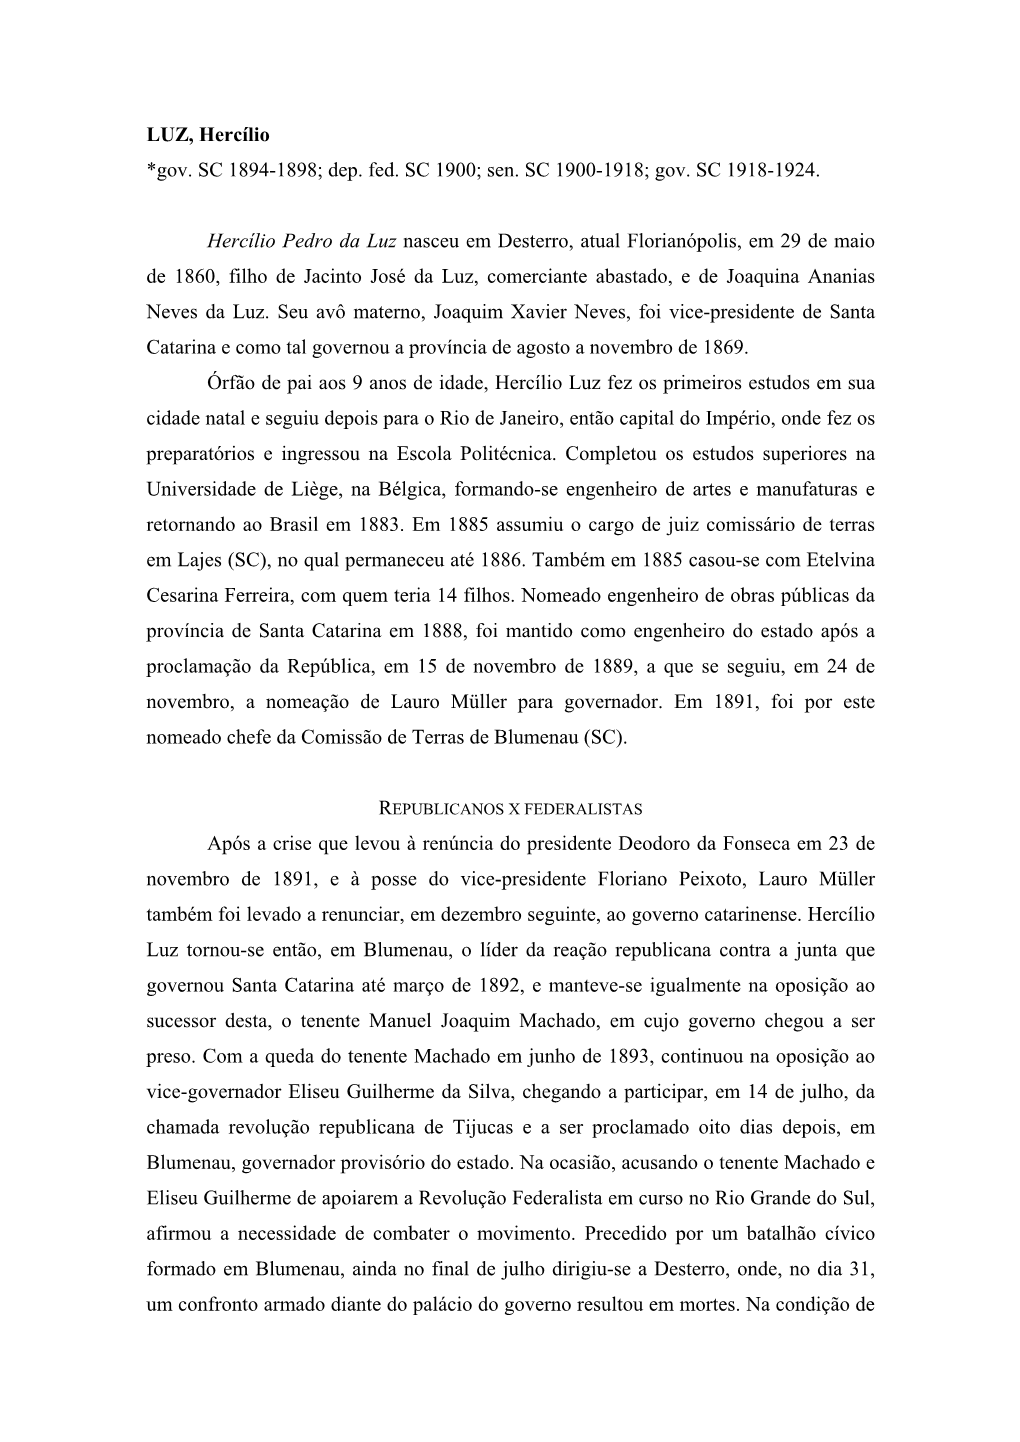 LUZ, Hercílio *Gov. SC 1894-1898; Dep. Fed. SC 1900; Sen